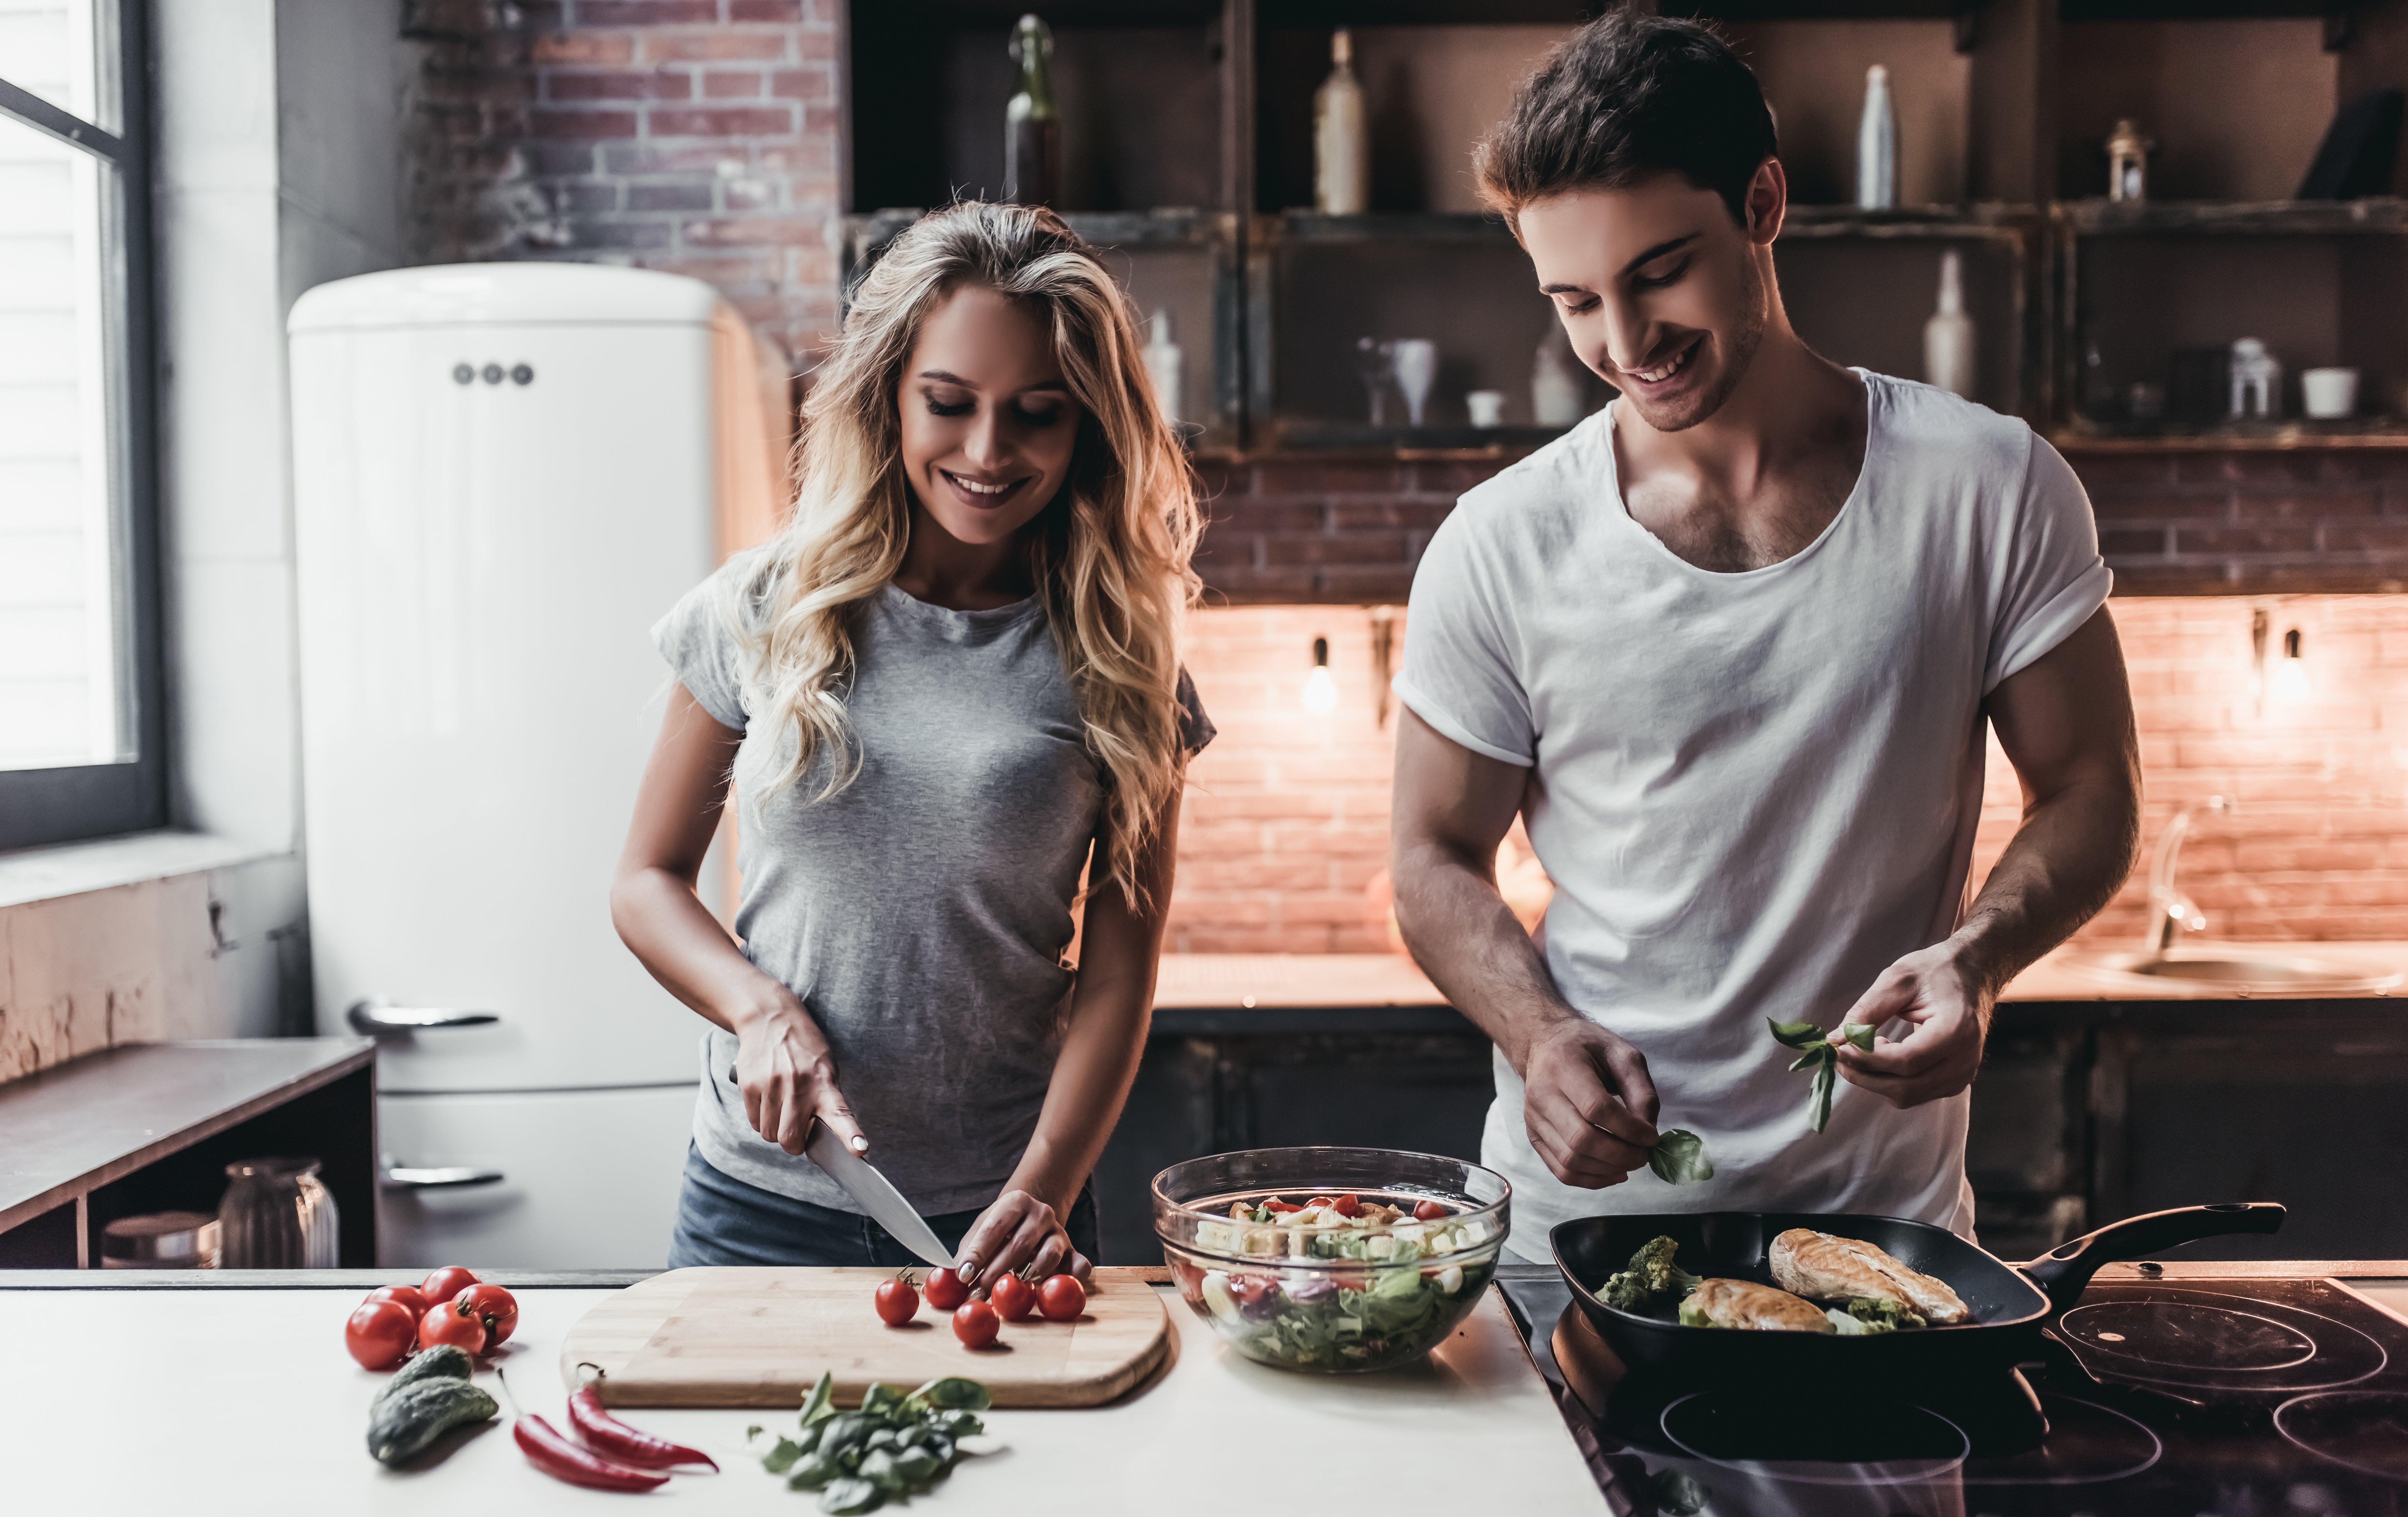 Happy couple preparing food in the kitchen. | Source: Shutterstock.com